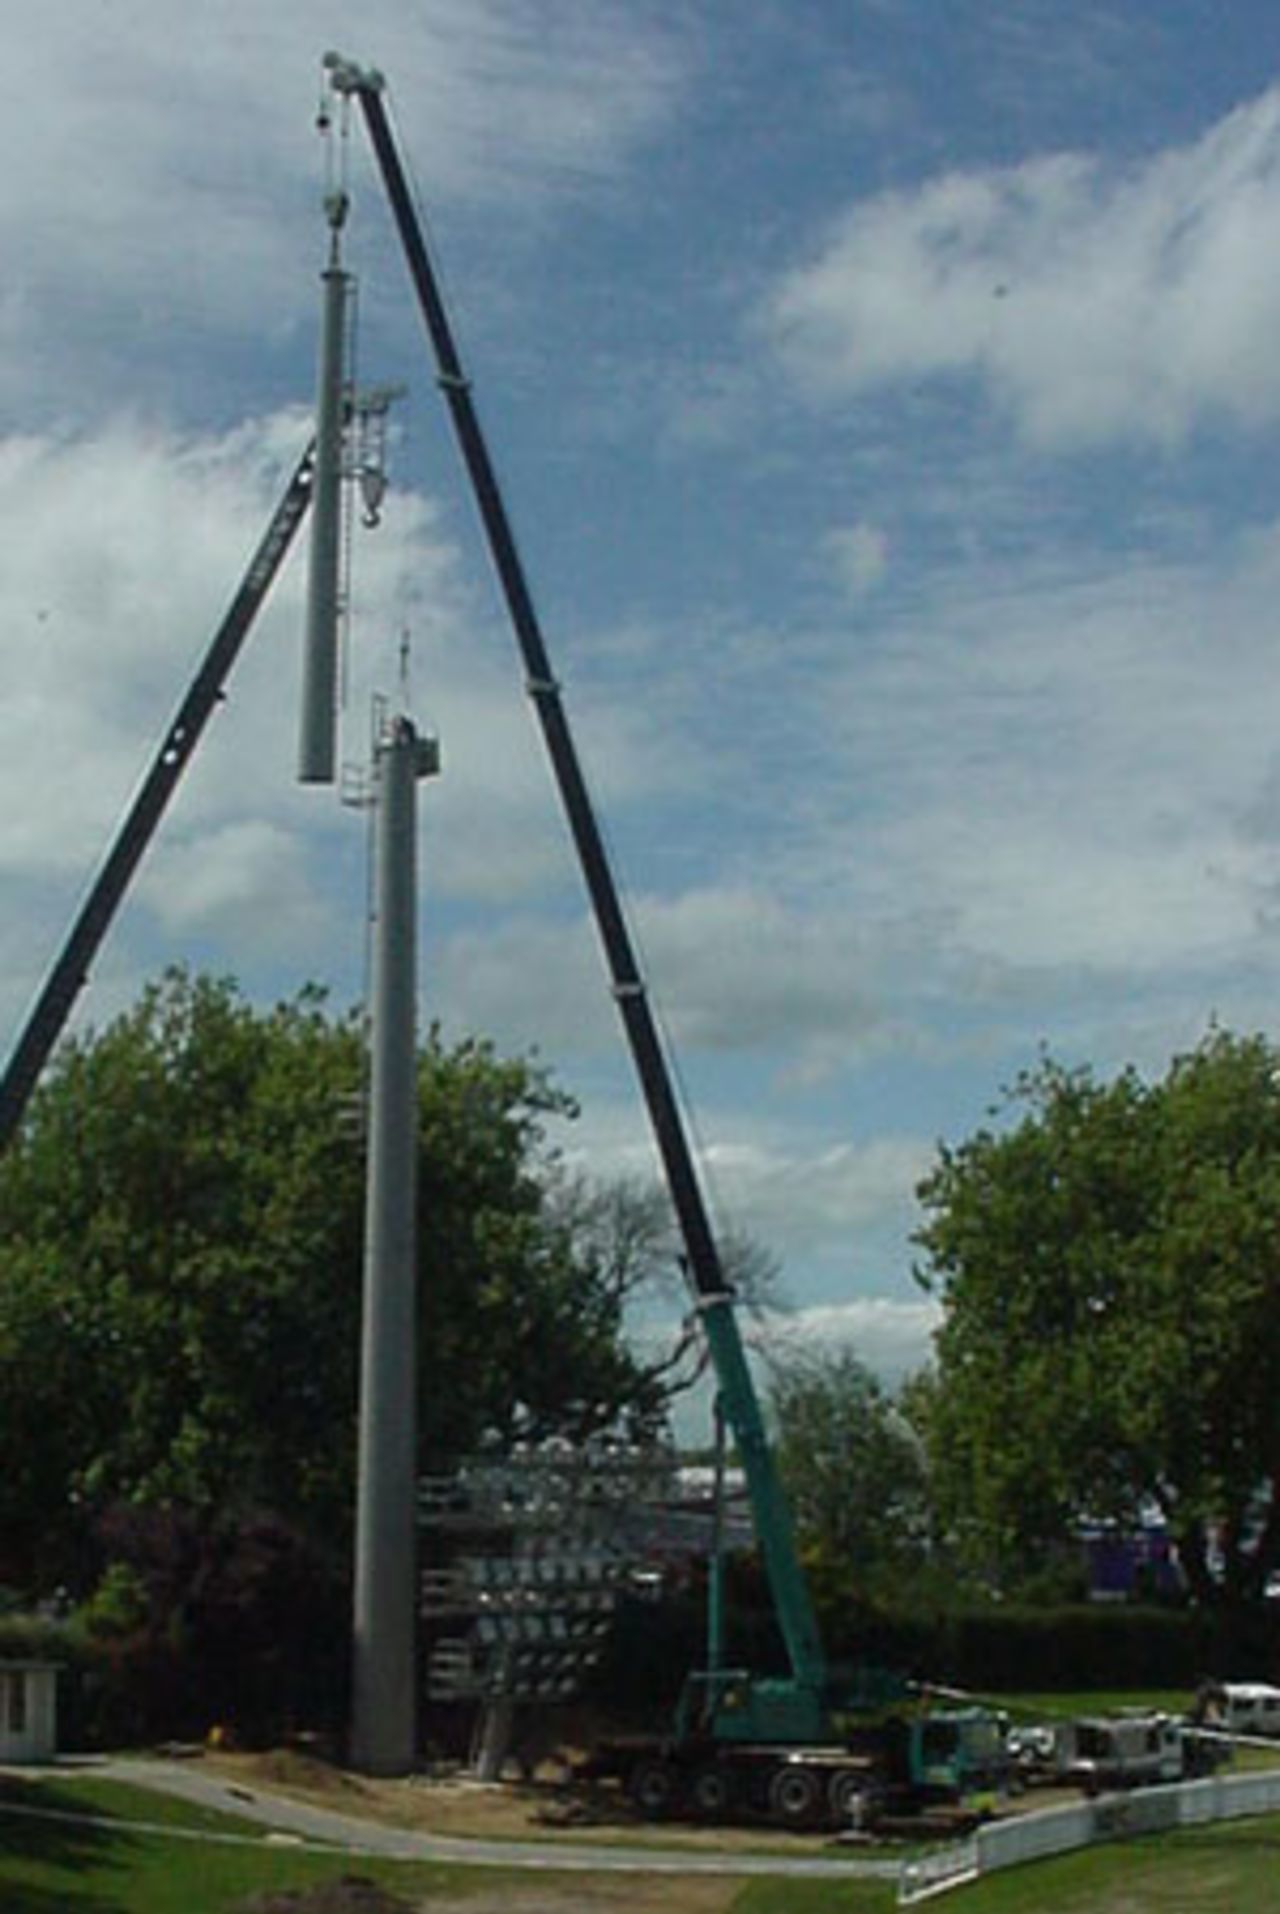 Cranes hoist a section of a new light tower at WestpacTrust Park, Hamilton. 19 October 2001.